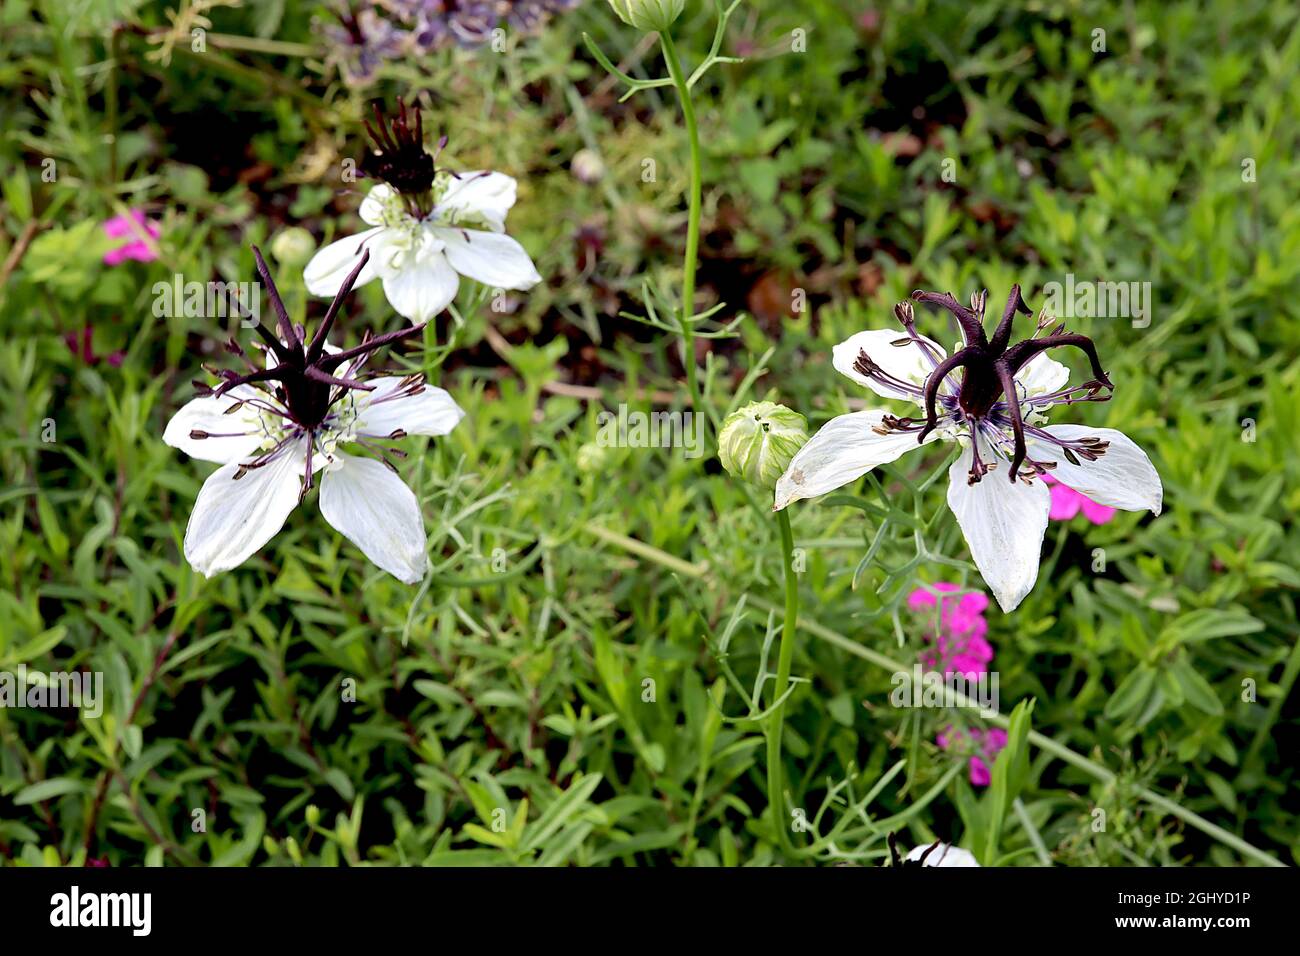 Nigella papillosa / hispanica African Bride love-in-a-mist African Bride - white flowers, purple black upright stamens,  August, England, UK Stock Photo